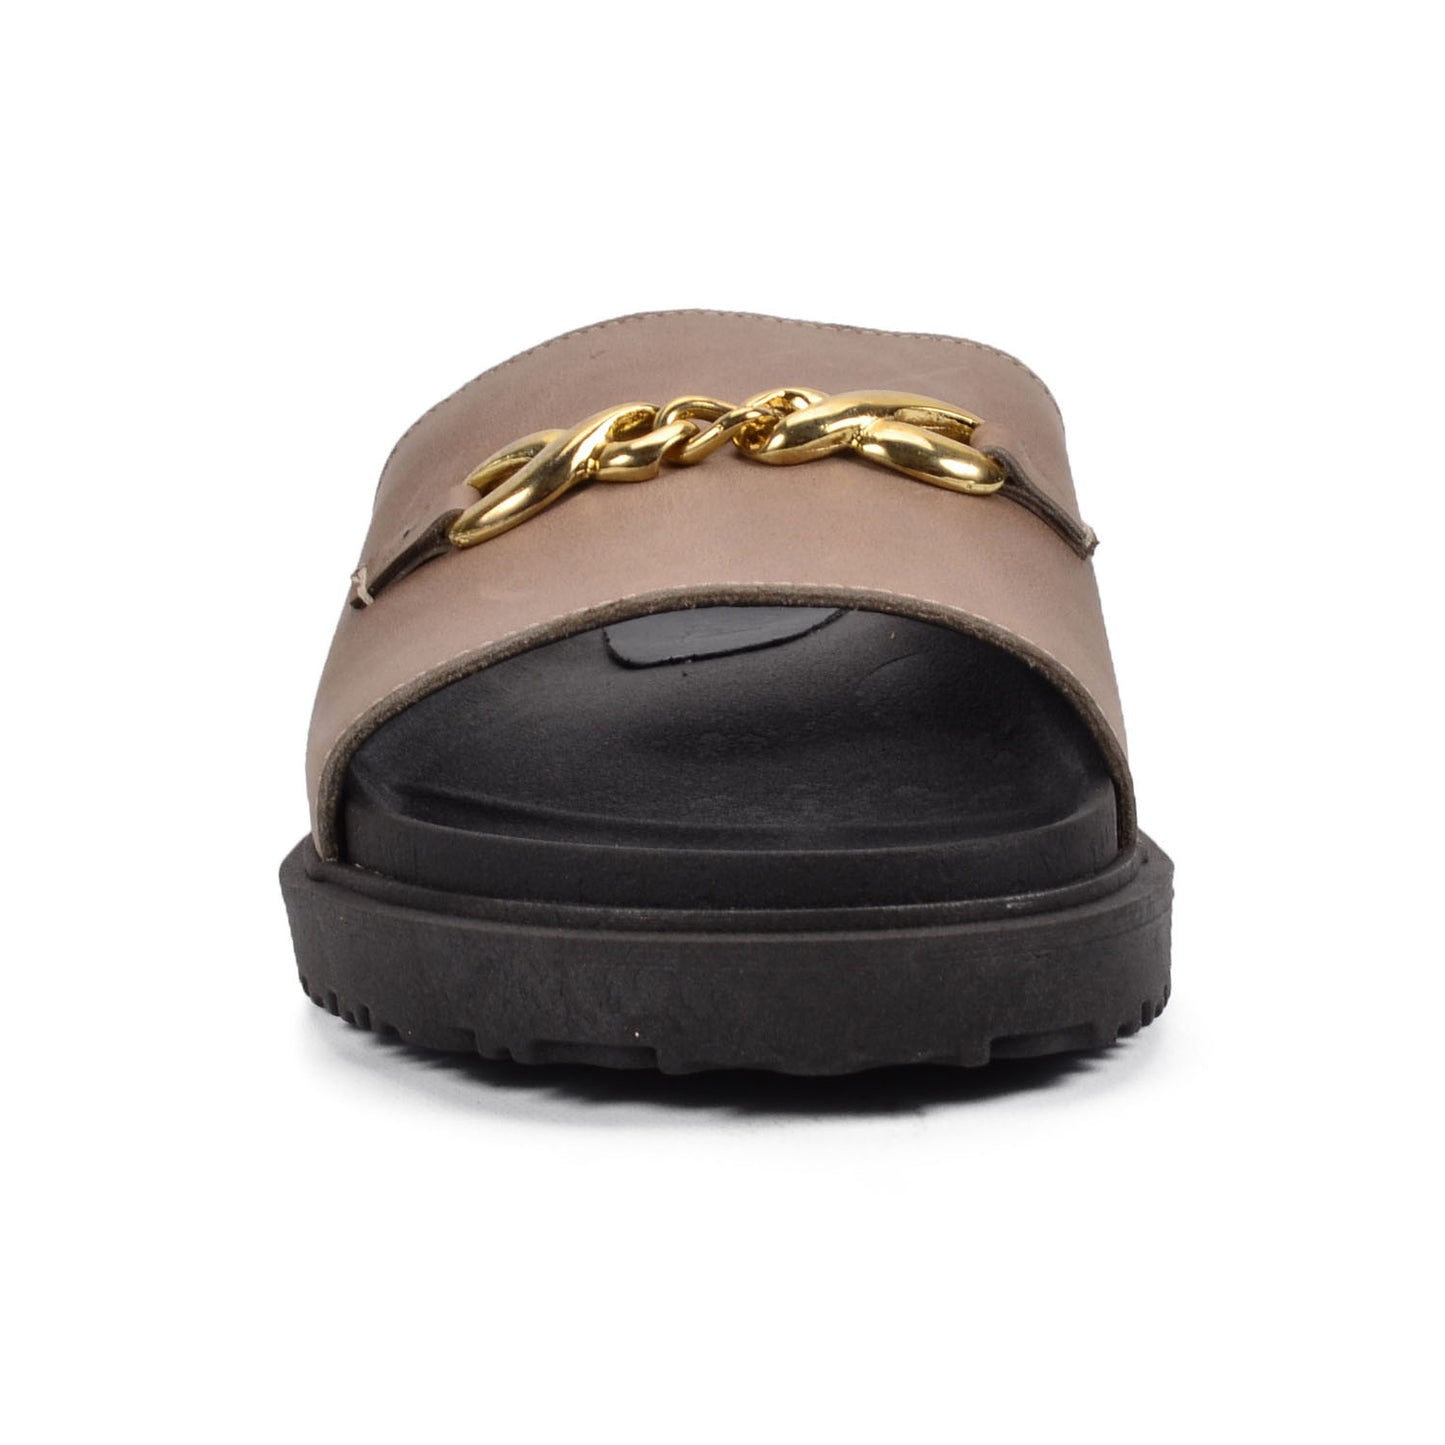 Portugal Mink | Flat Leather Sandals